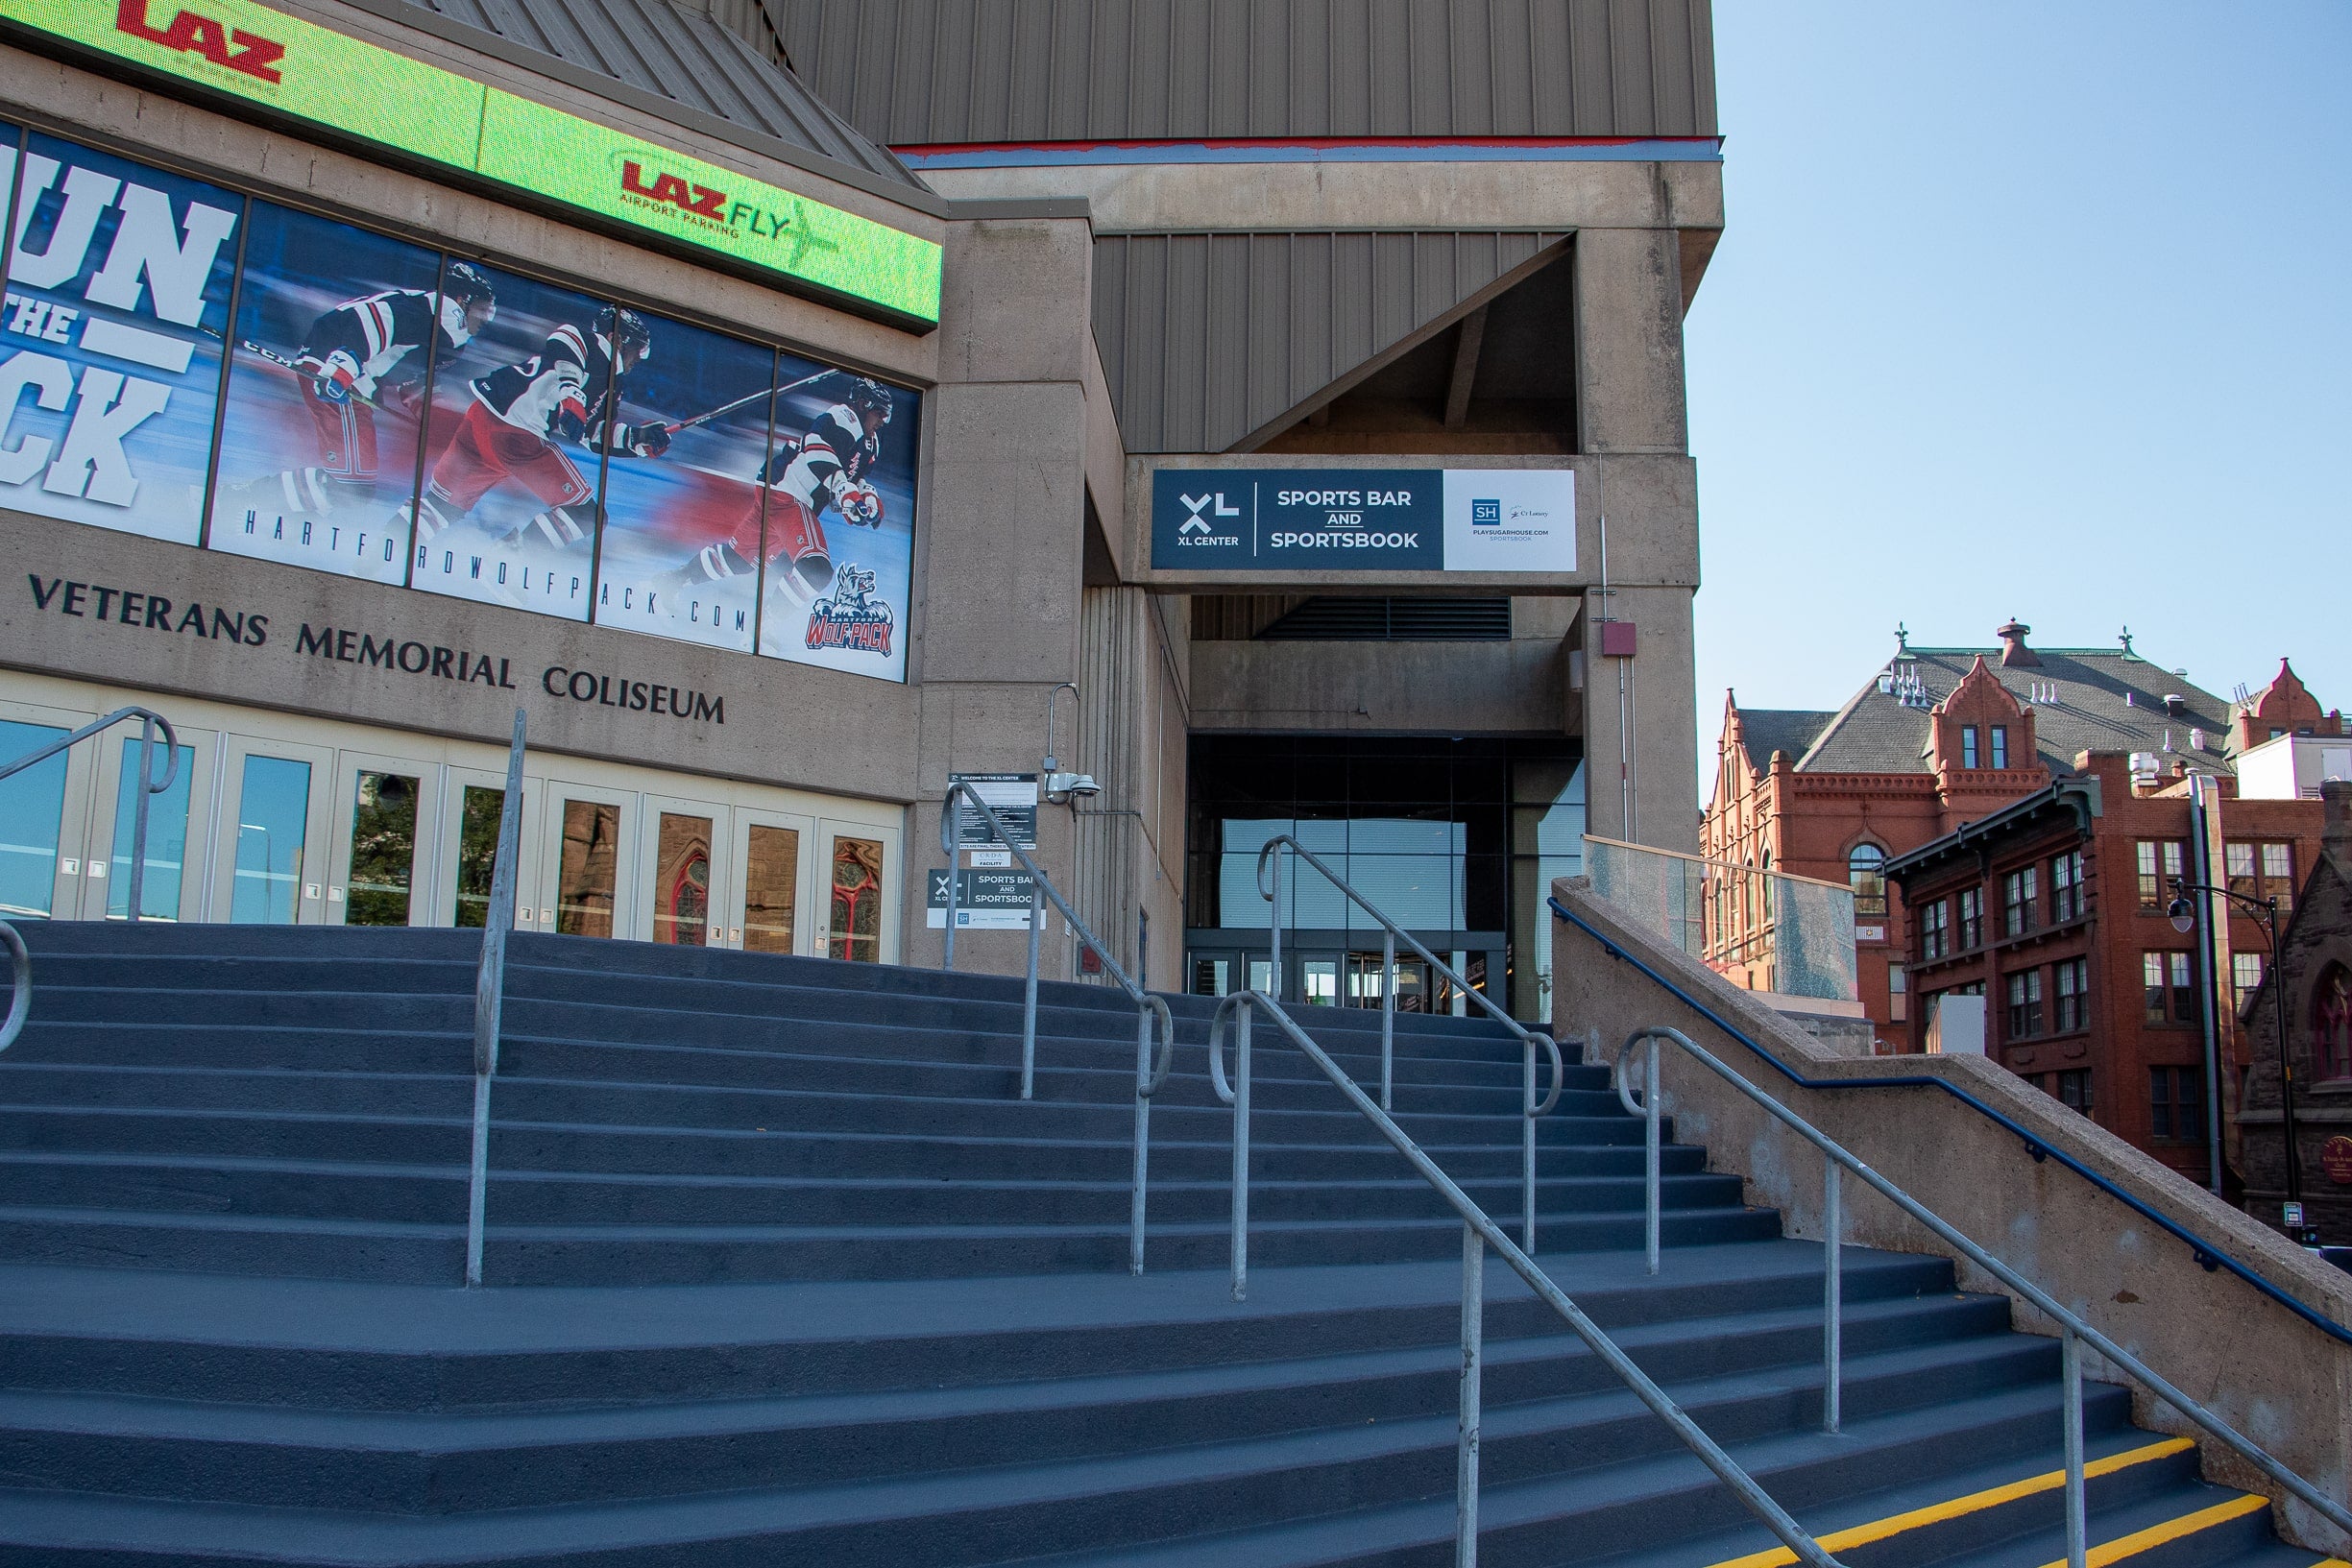 XL Center Sportsbook Entrance